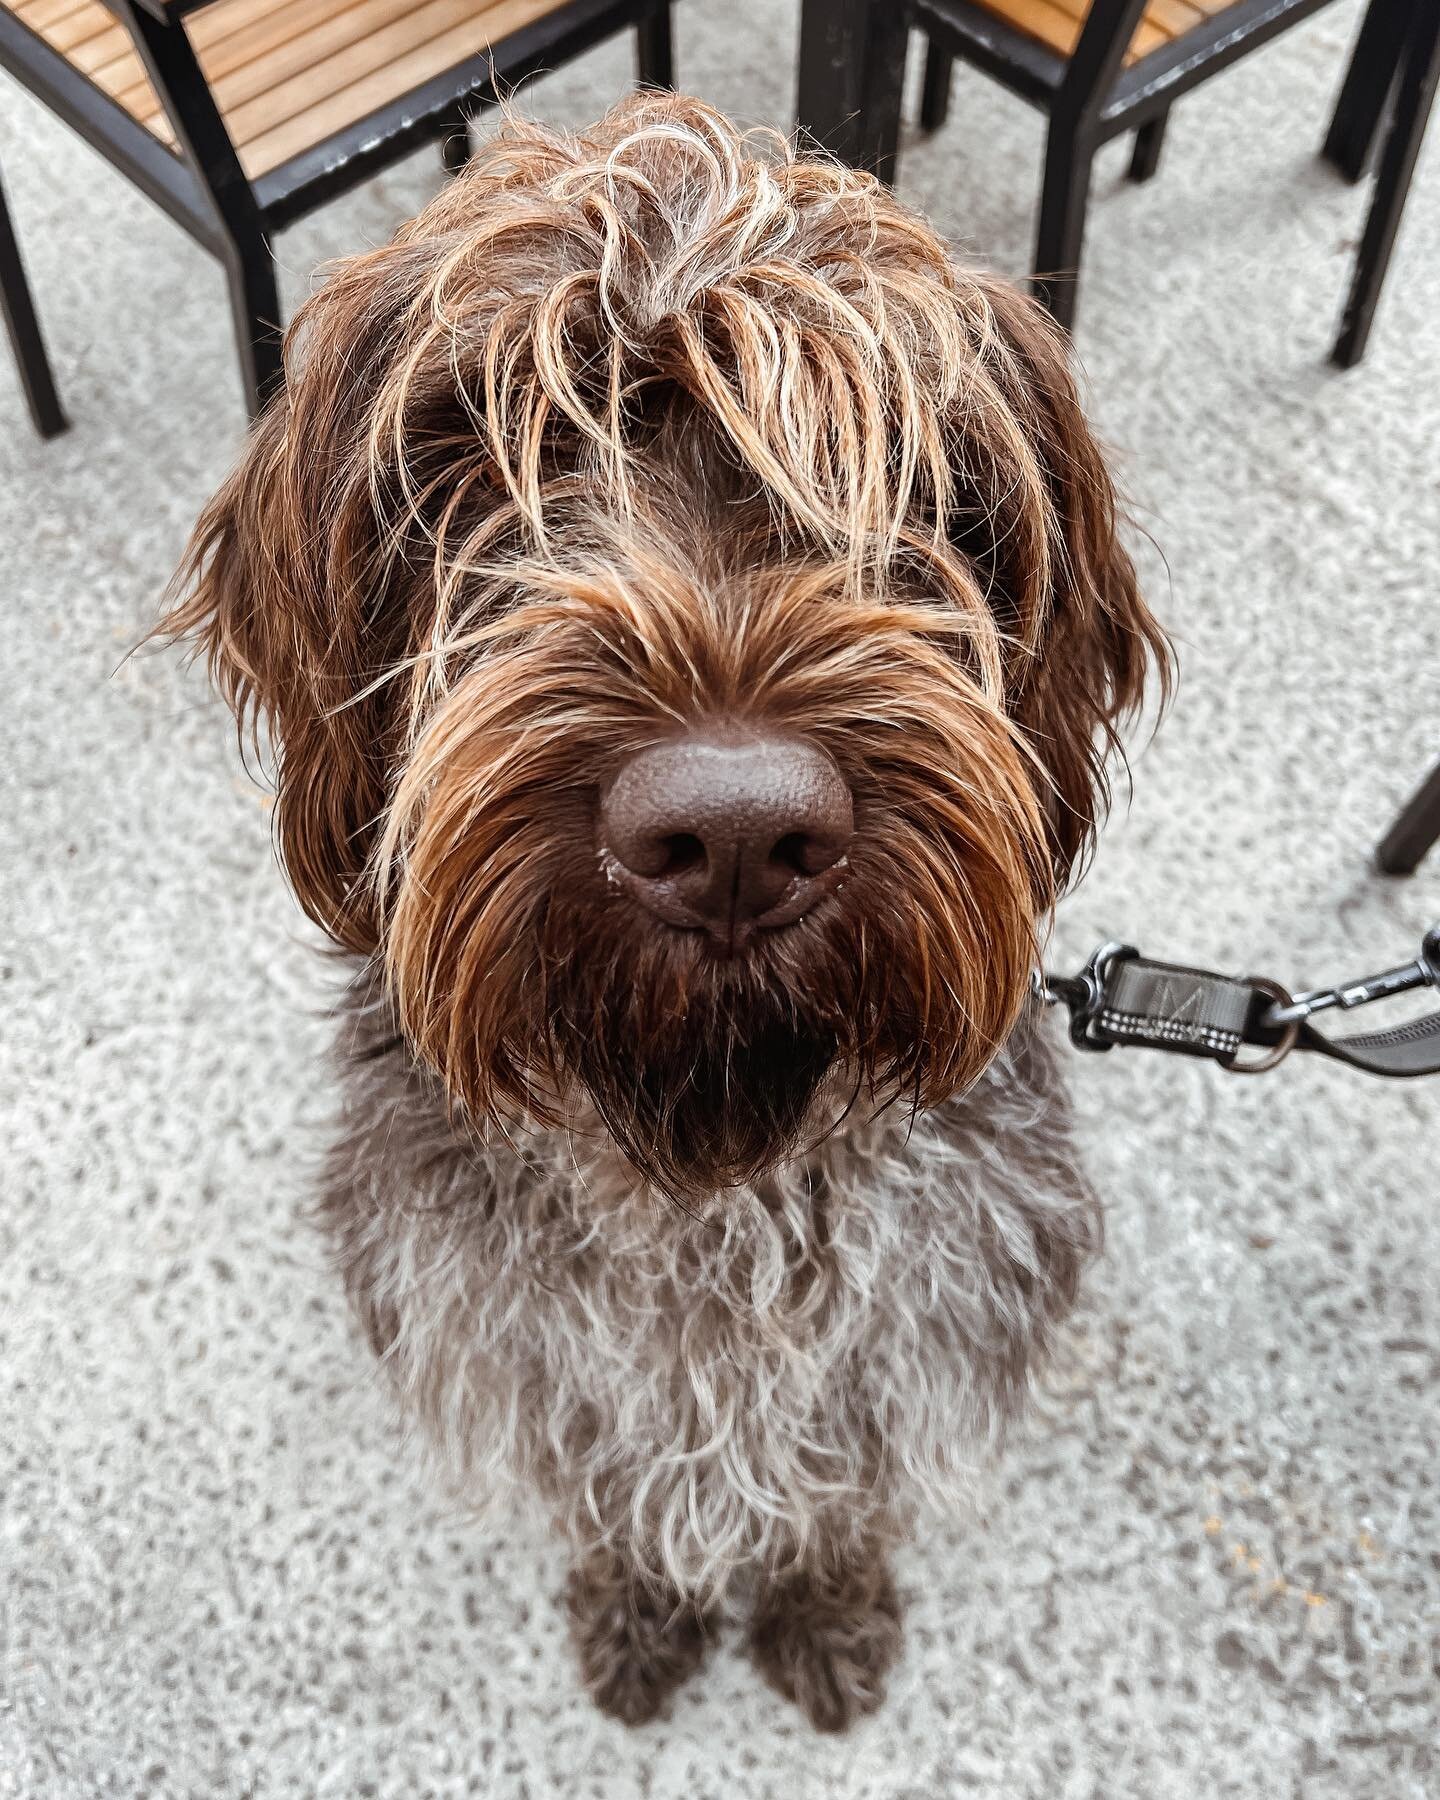 Sunday pupper; Dennis. Best hair &lsquo;do I think I&rsquo;ve seen yet, we love a statement fringe! 
&bull;
#dogsincafes #dogfuriendly #dogfriendlycafe #melkshamcafe #gooddog #lovedogs #dogsofinstagram #bakerycafe